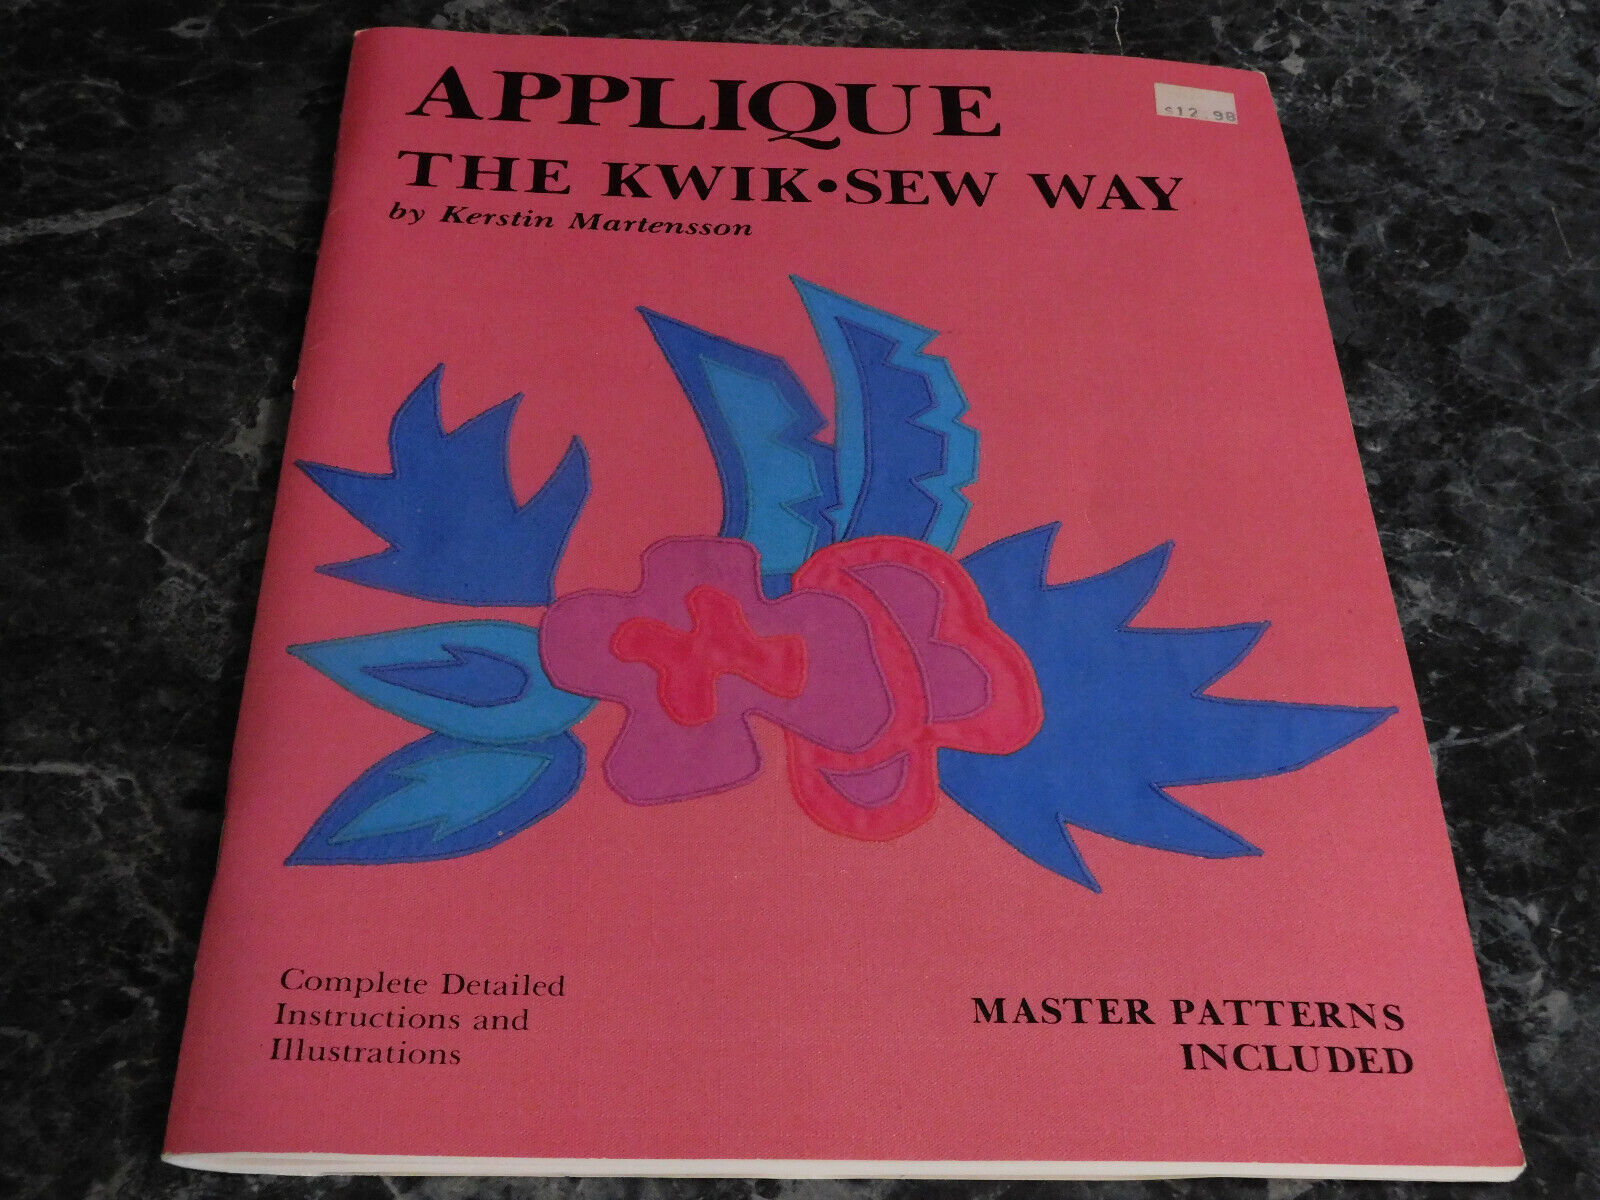 Applique The Kwik Sew Way by Kerstin Martensson - $3.99